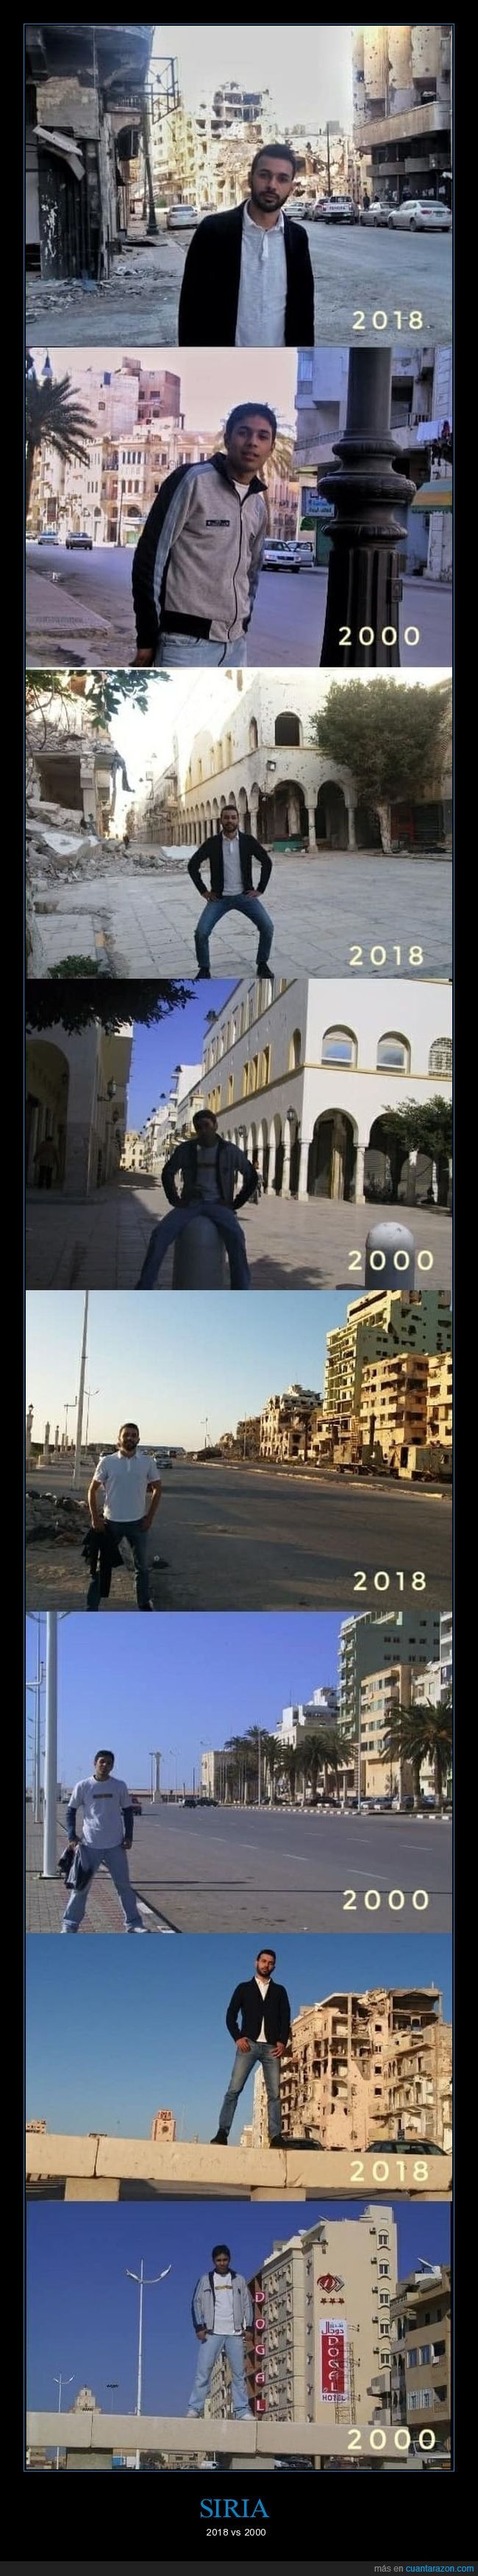 siria,200,2018,antes,después,guerra